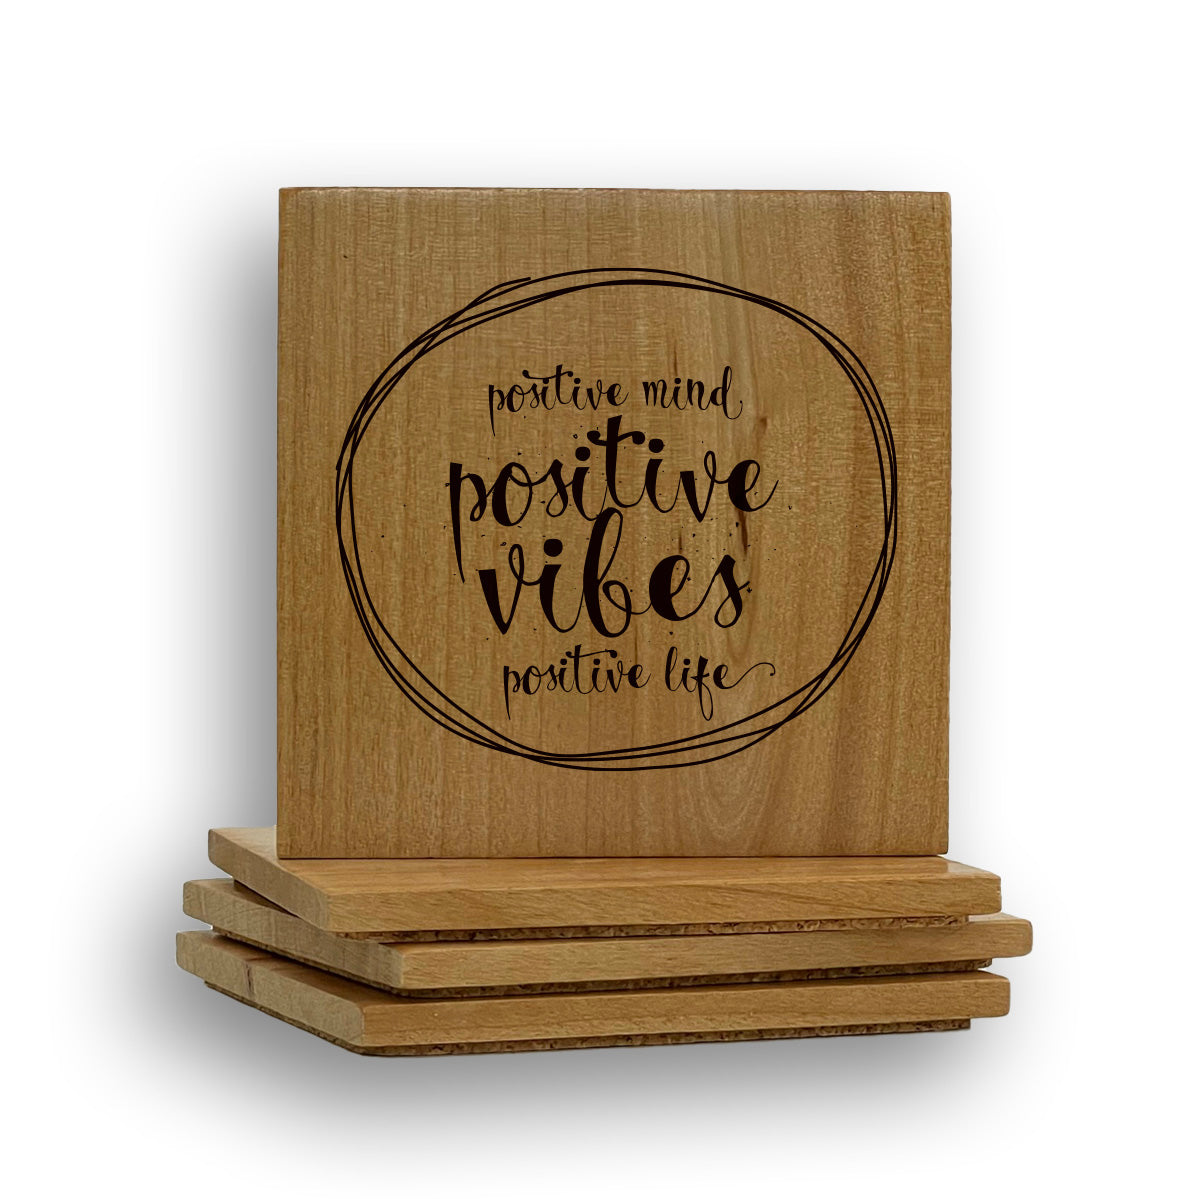 Positive Mind Vibes Coaster